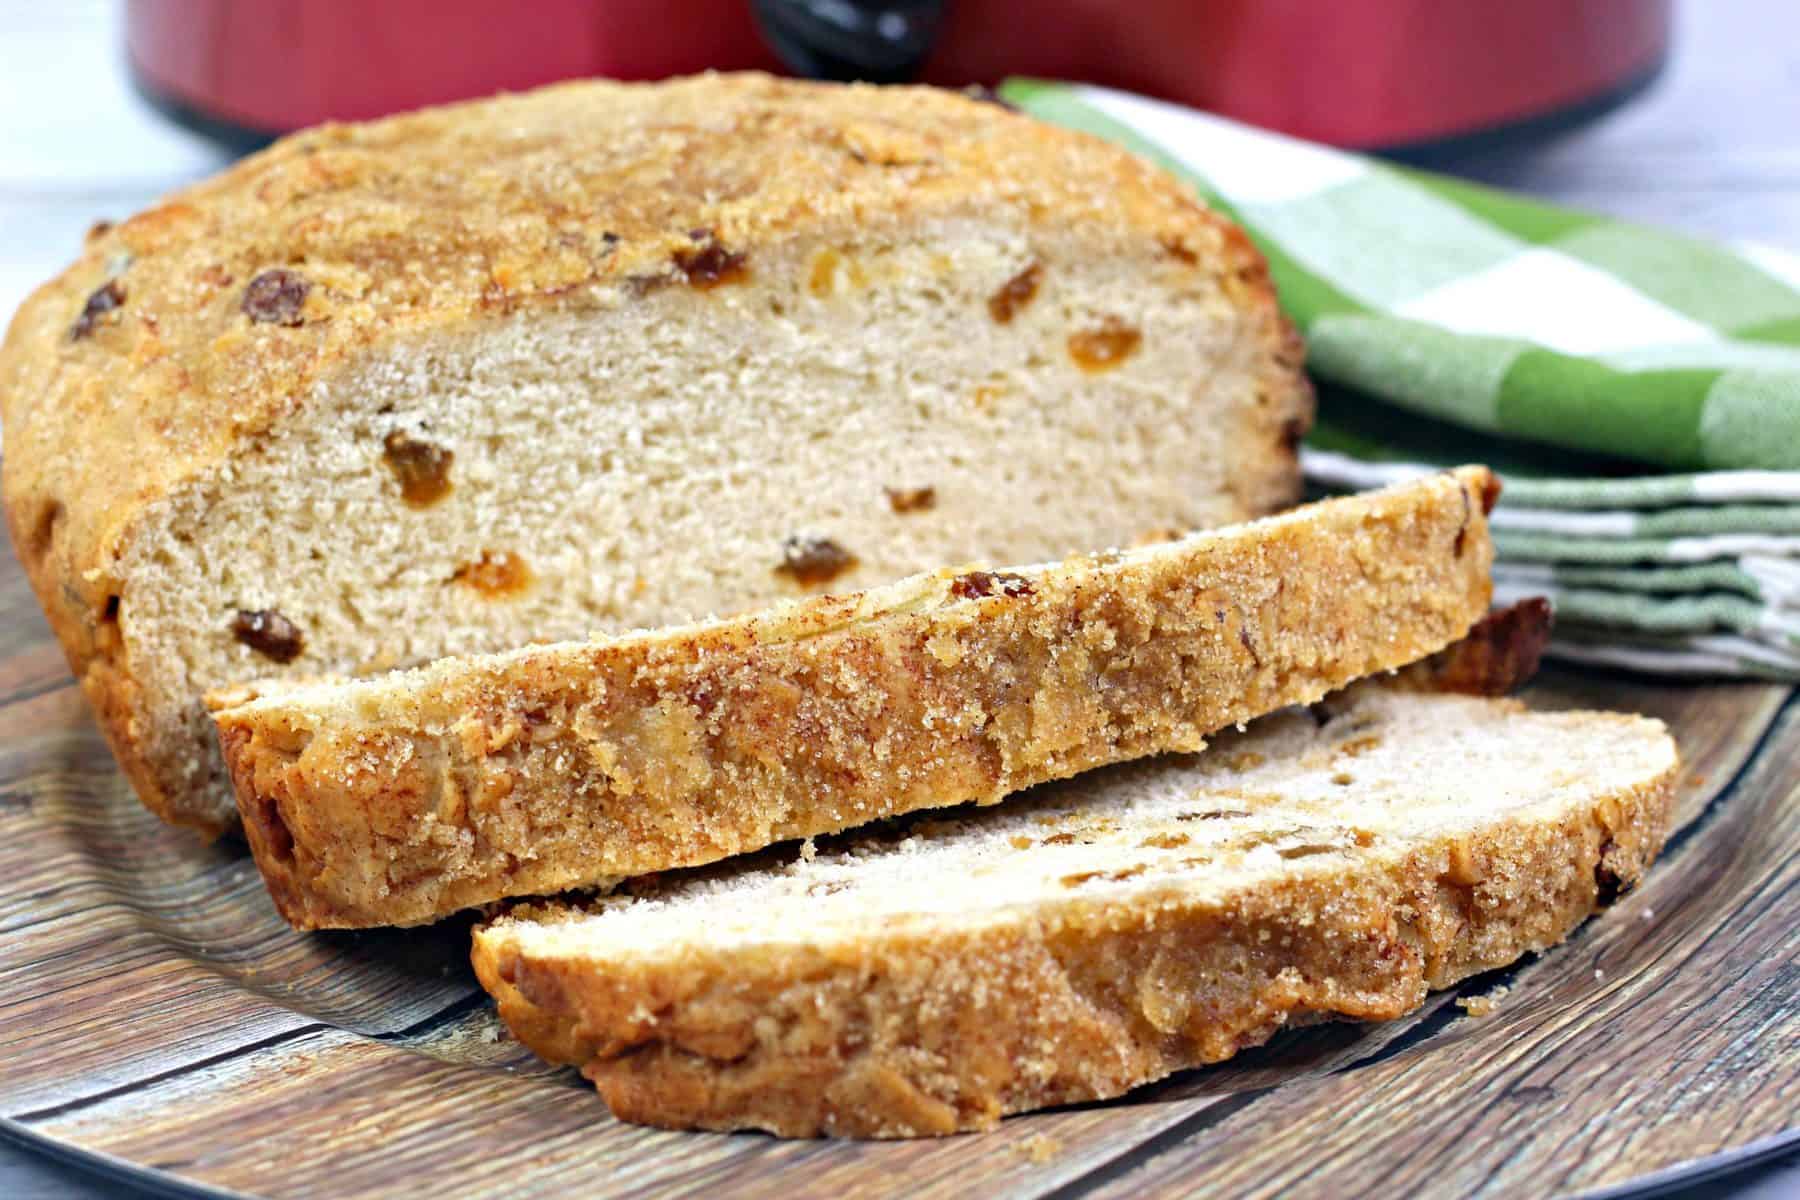 slow cooker yeast bread recipe, slow cooker quick bread